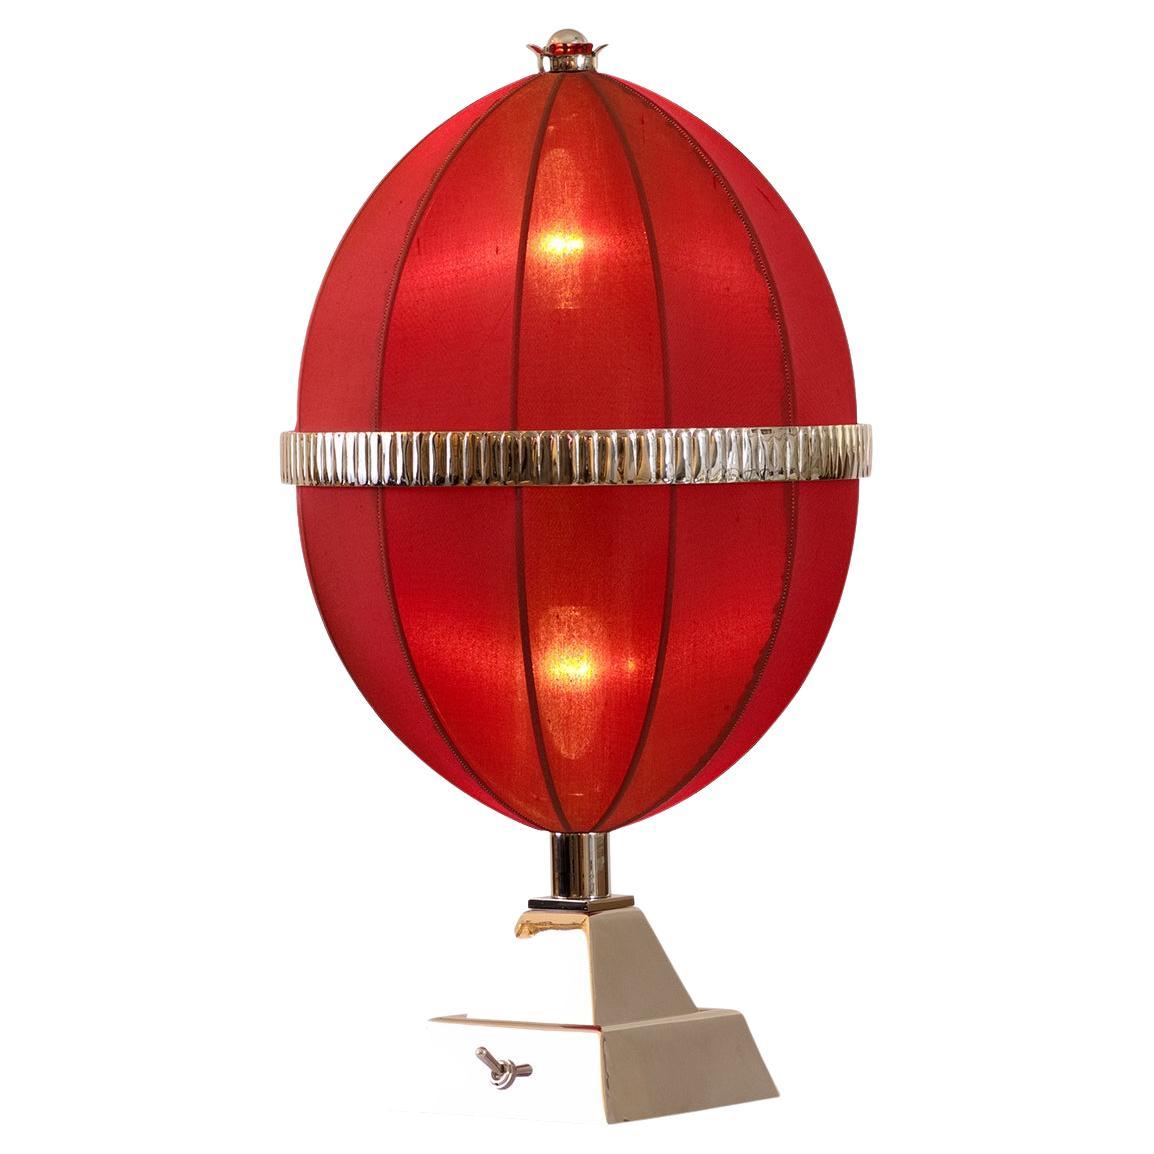 Josef Hoffmann & Wiener Werkstatte, Moldauer Silk&Brass Table Lamp, Re-Edition